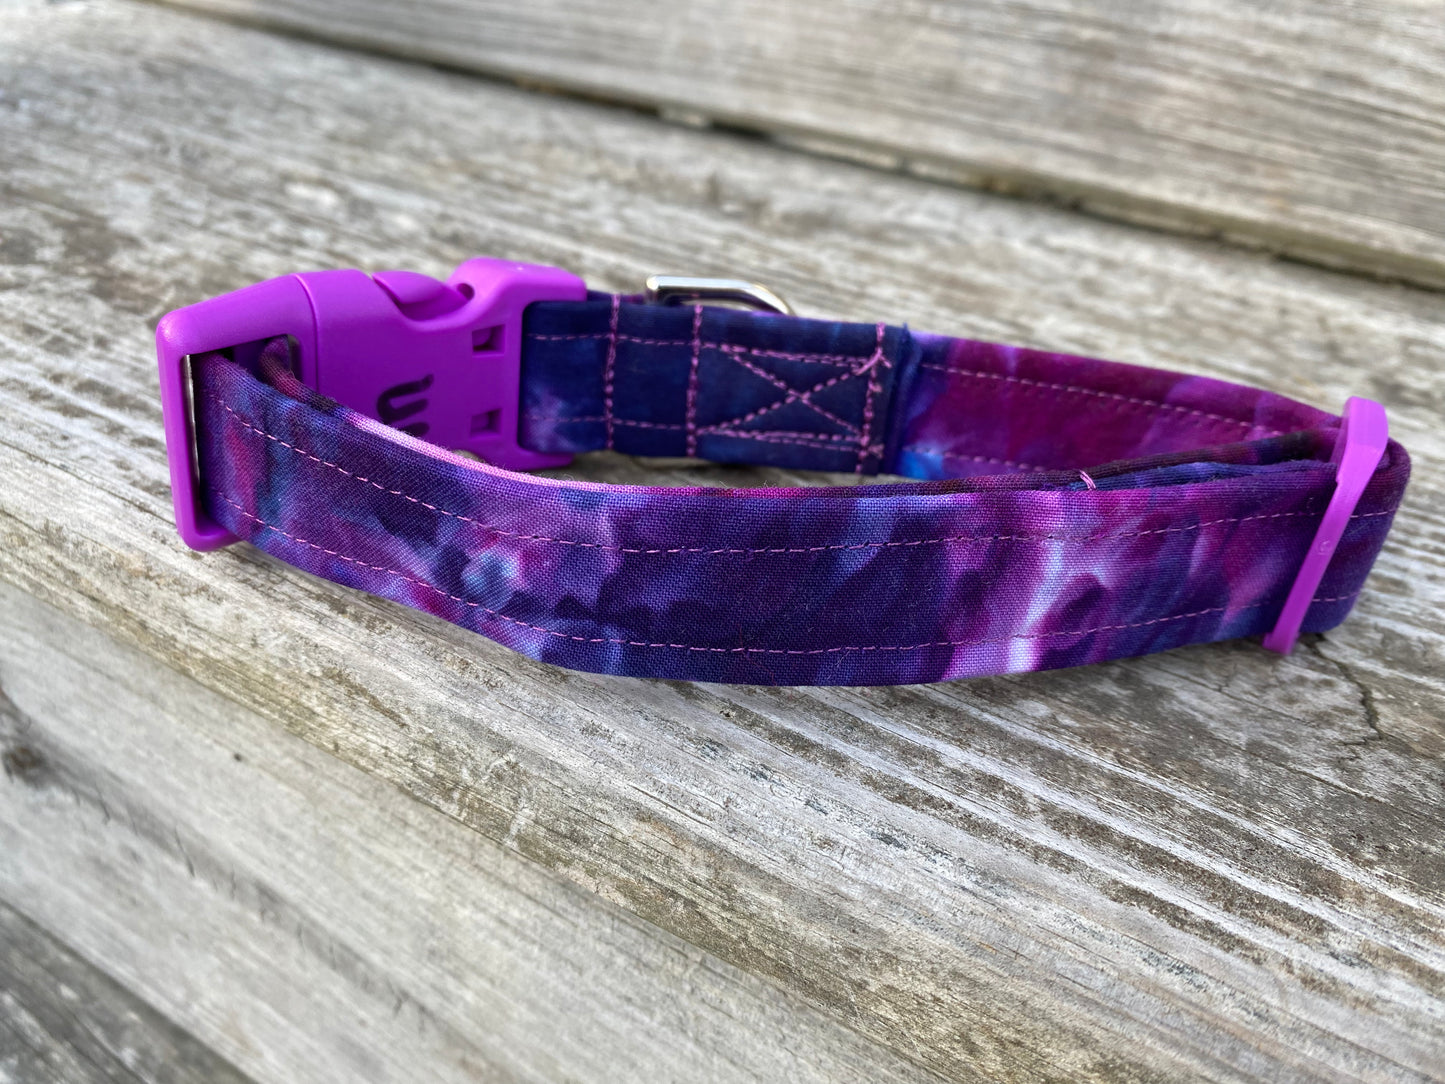 Medium dog collar handmade and dyed purple blue pinks